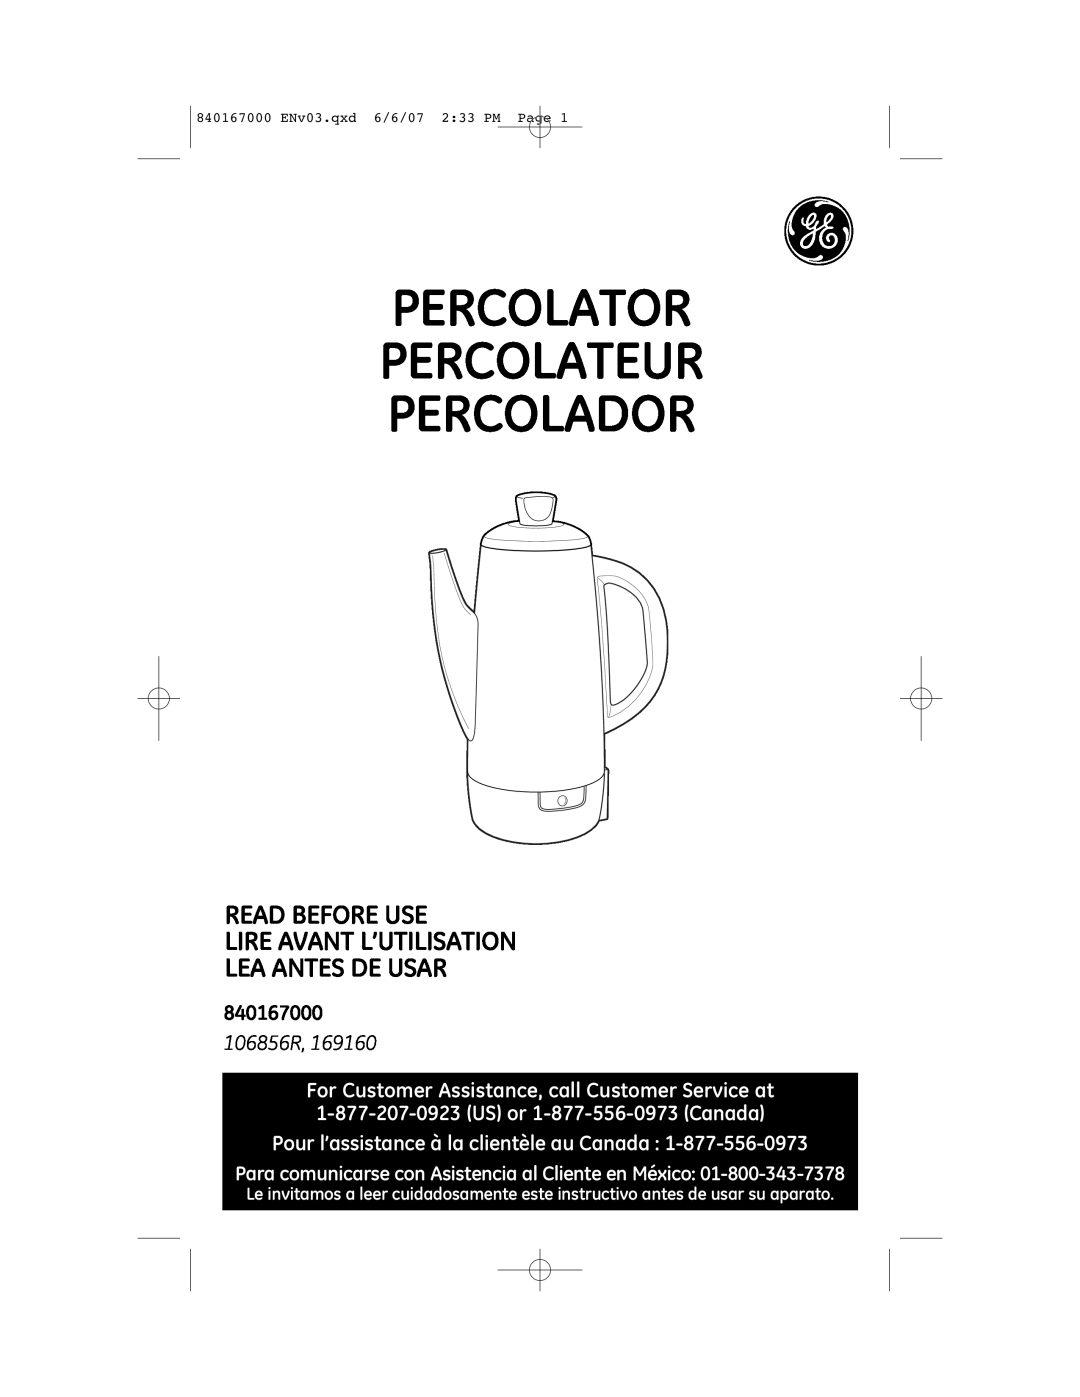 GE 840167000, 169160 manual Percolator Percolateur Percolador, Read Before Use Lire Avant L’Utilisation, Lea Antes De Usar 